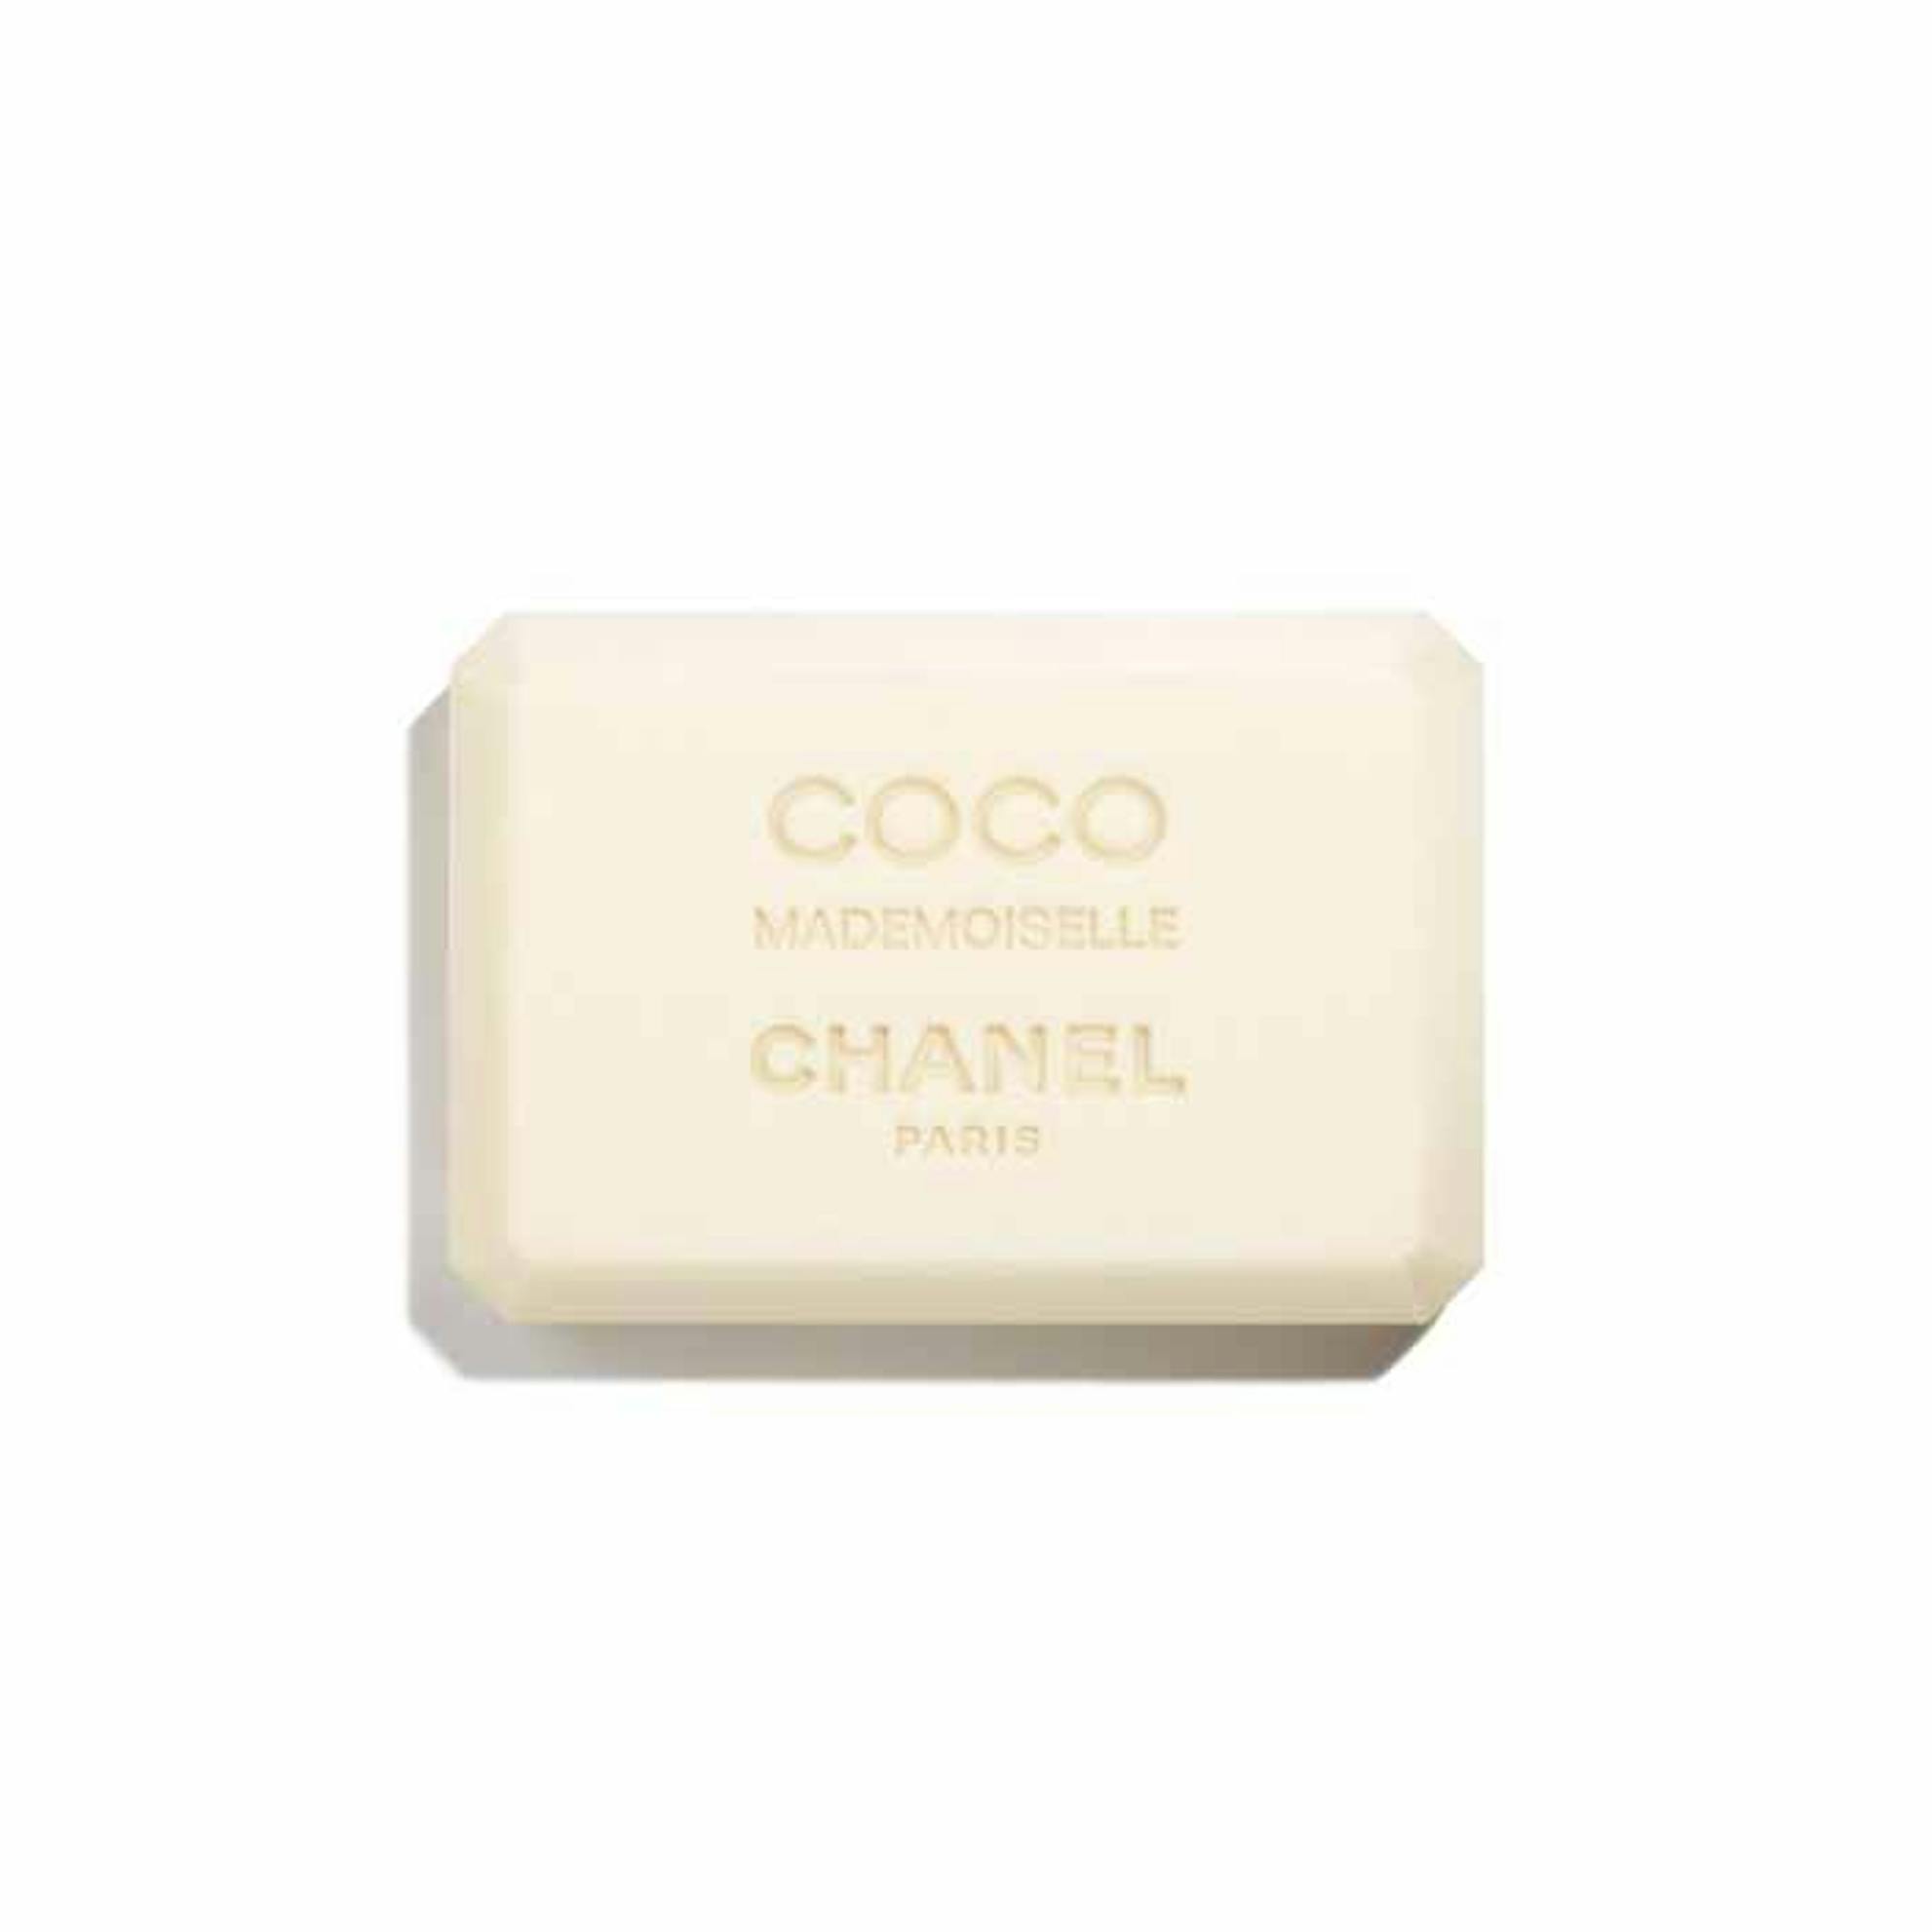 Coco Mademoiselle Bath Soap, CHANEL Coco Mademoiselle Soap Bar